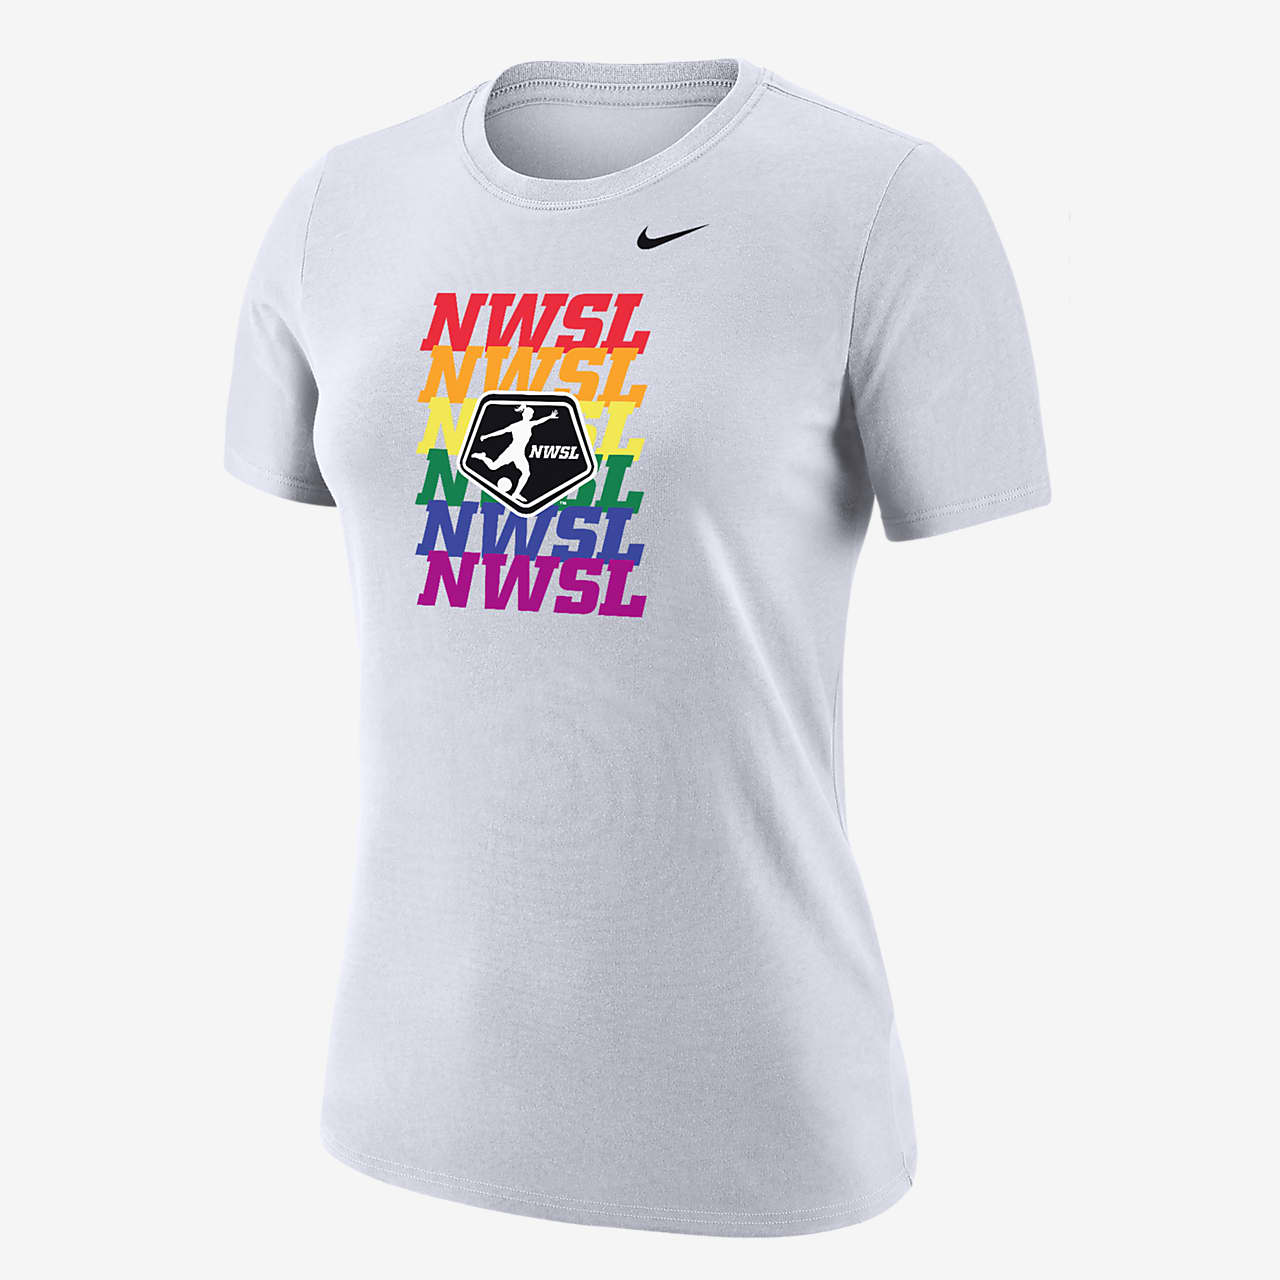 NWSL Women\'s Nike Soccer T-Shirt.